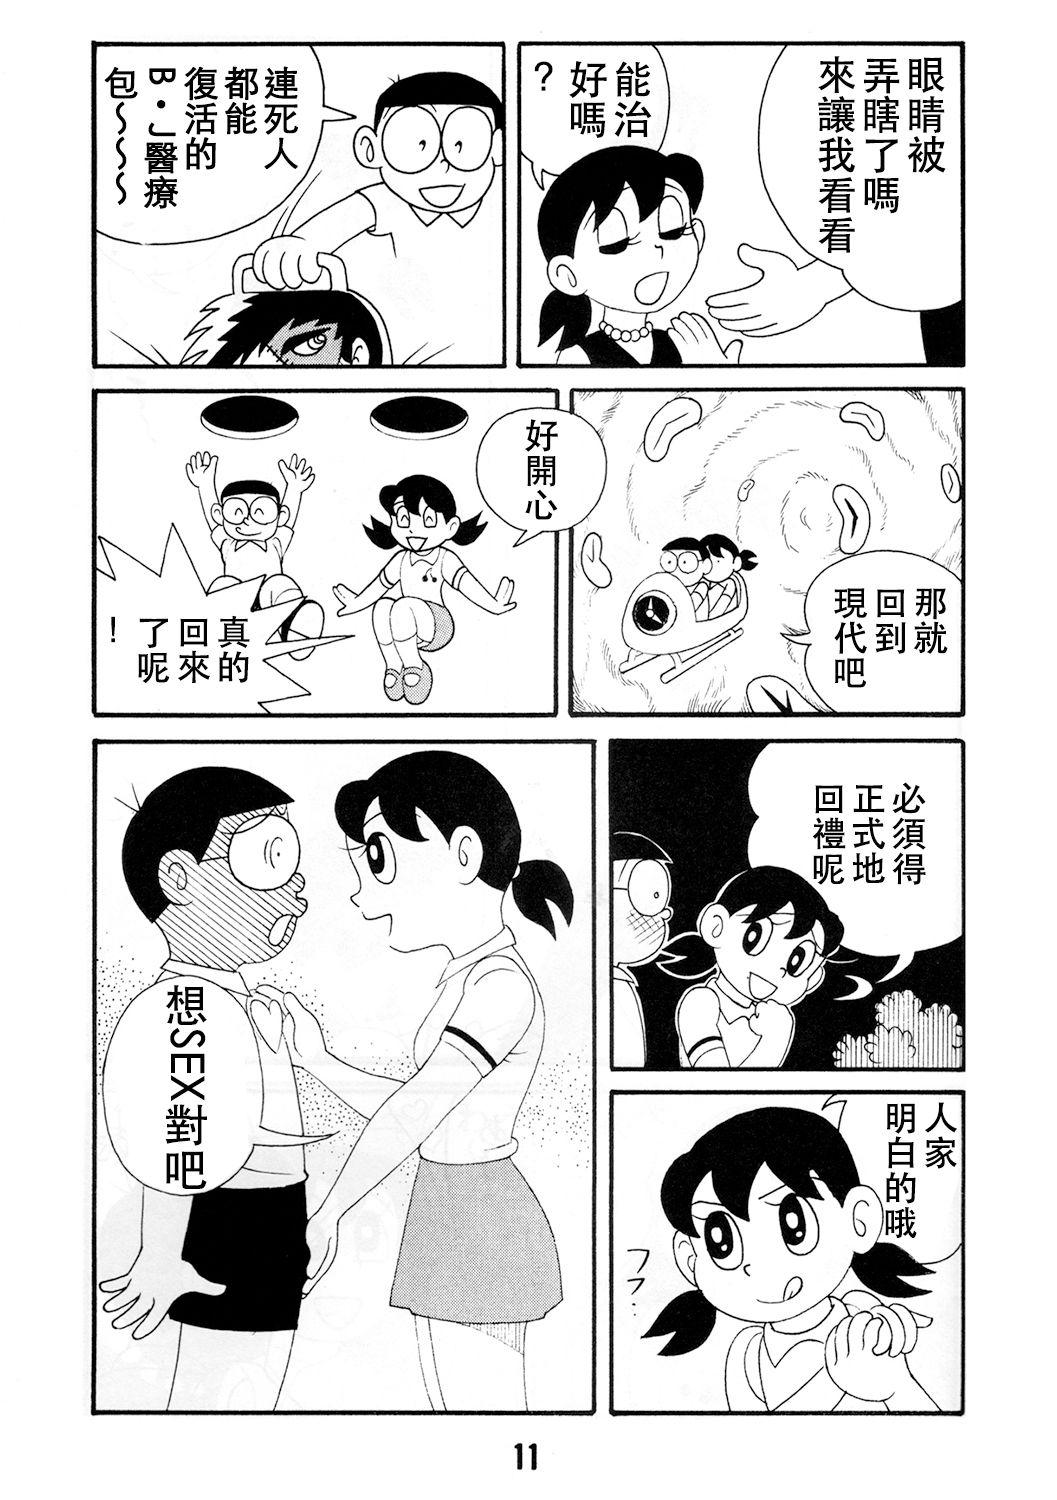 Skirt TWIN TAIL Vol.18 Joshi Ana - Doraemon Esper mami Pmv - Page 11